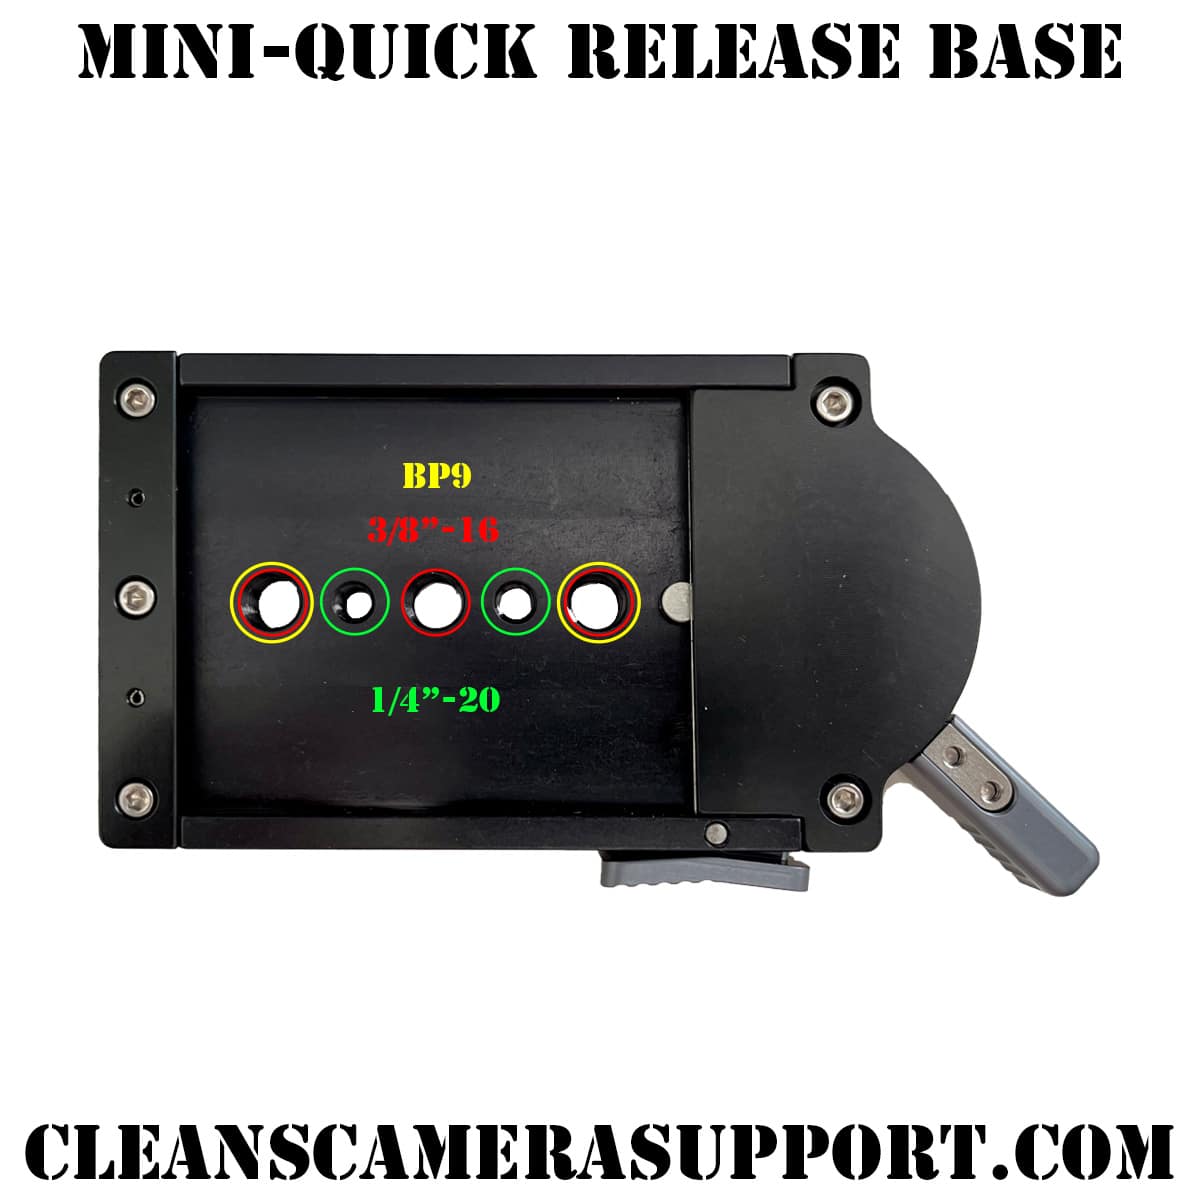 mini quick release base (qrb)